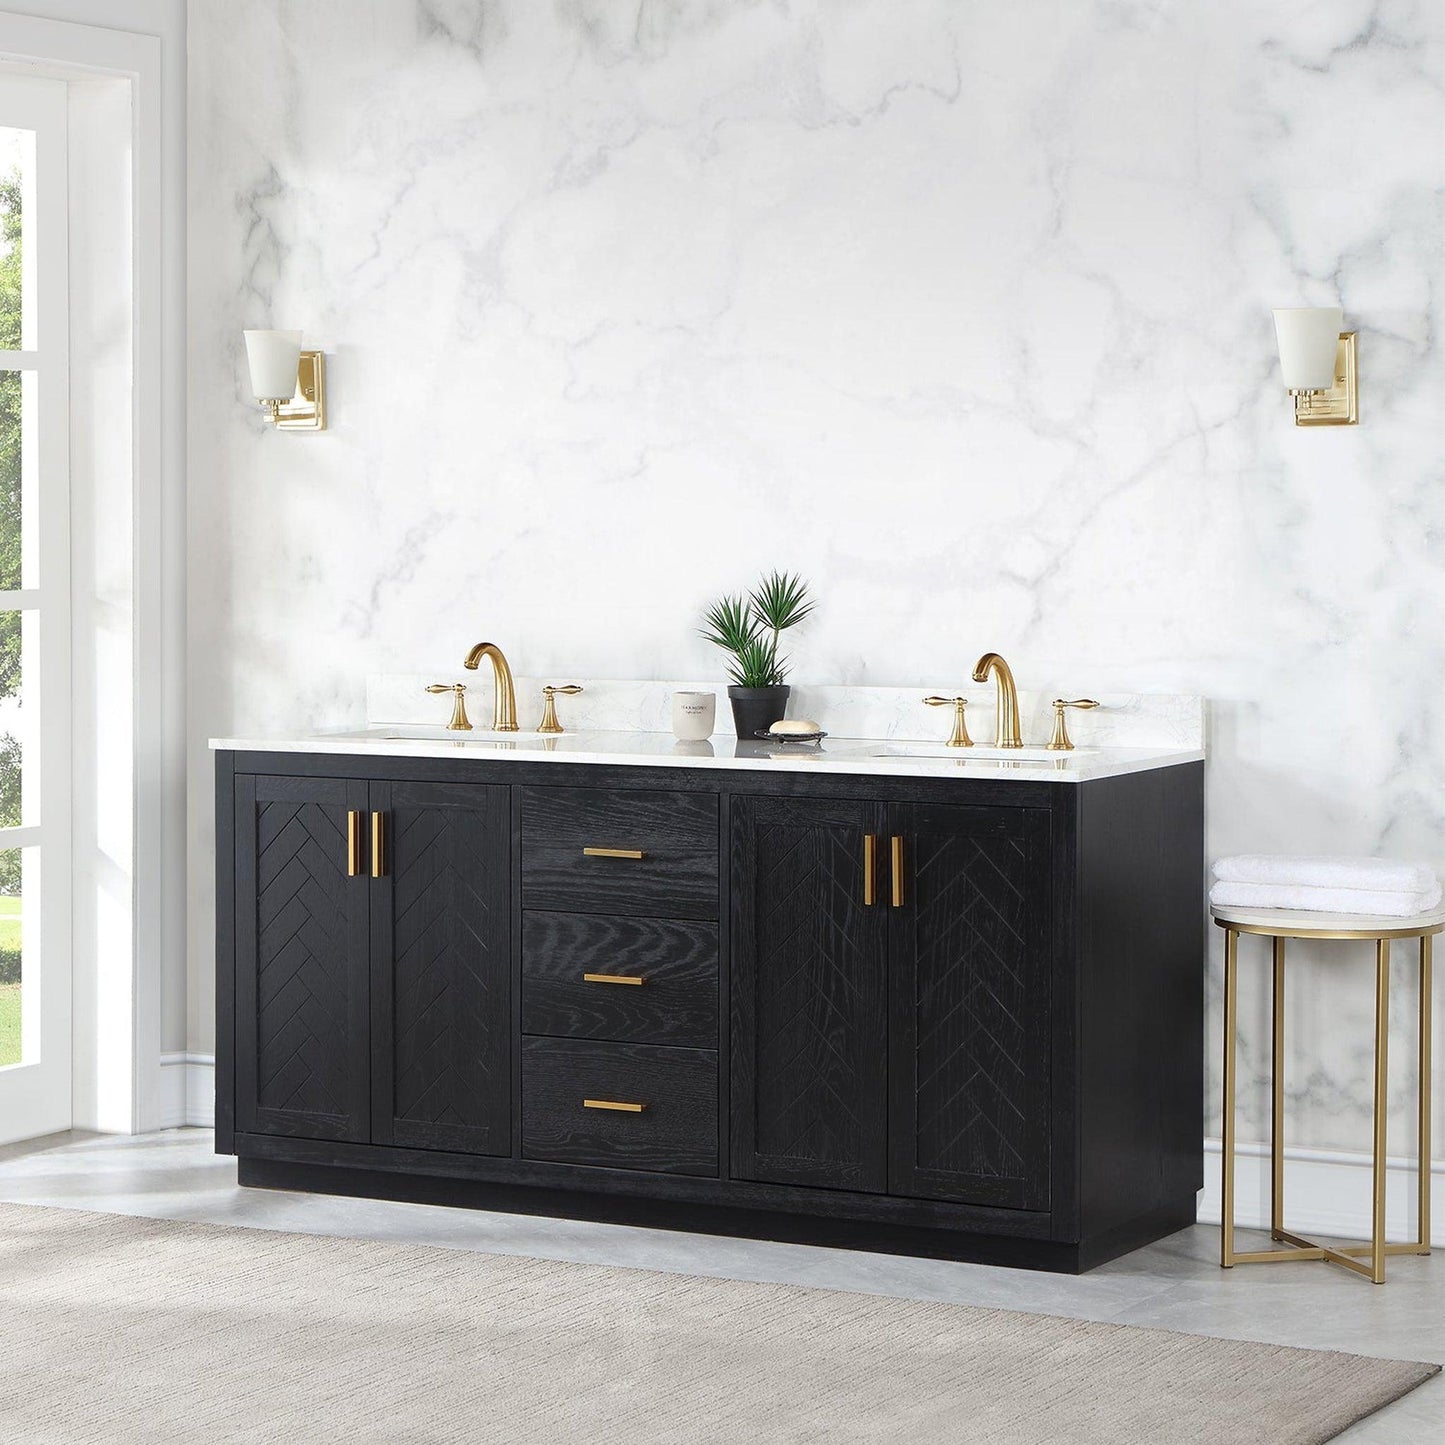 Altair Gazsi 72" Black Oak Freestanding Double Bathroom Vanity Set With Elegant Composite Grain White Stone Top, Two Rectangular Undermount Ceramic Sinks, Overflow, and Backsplash